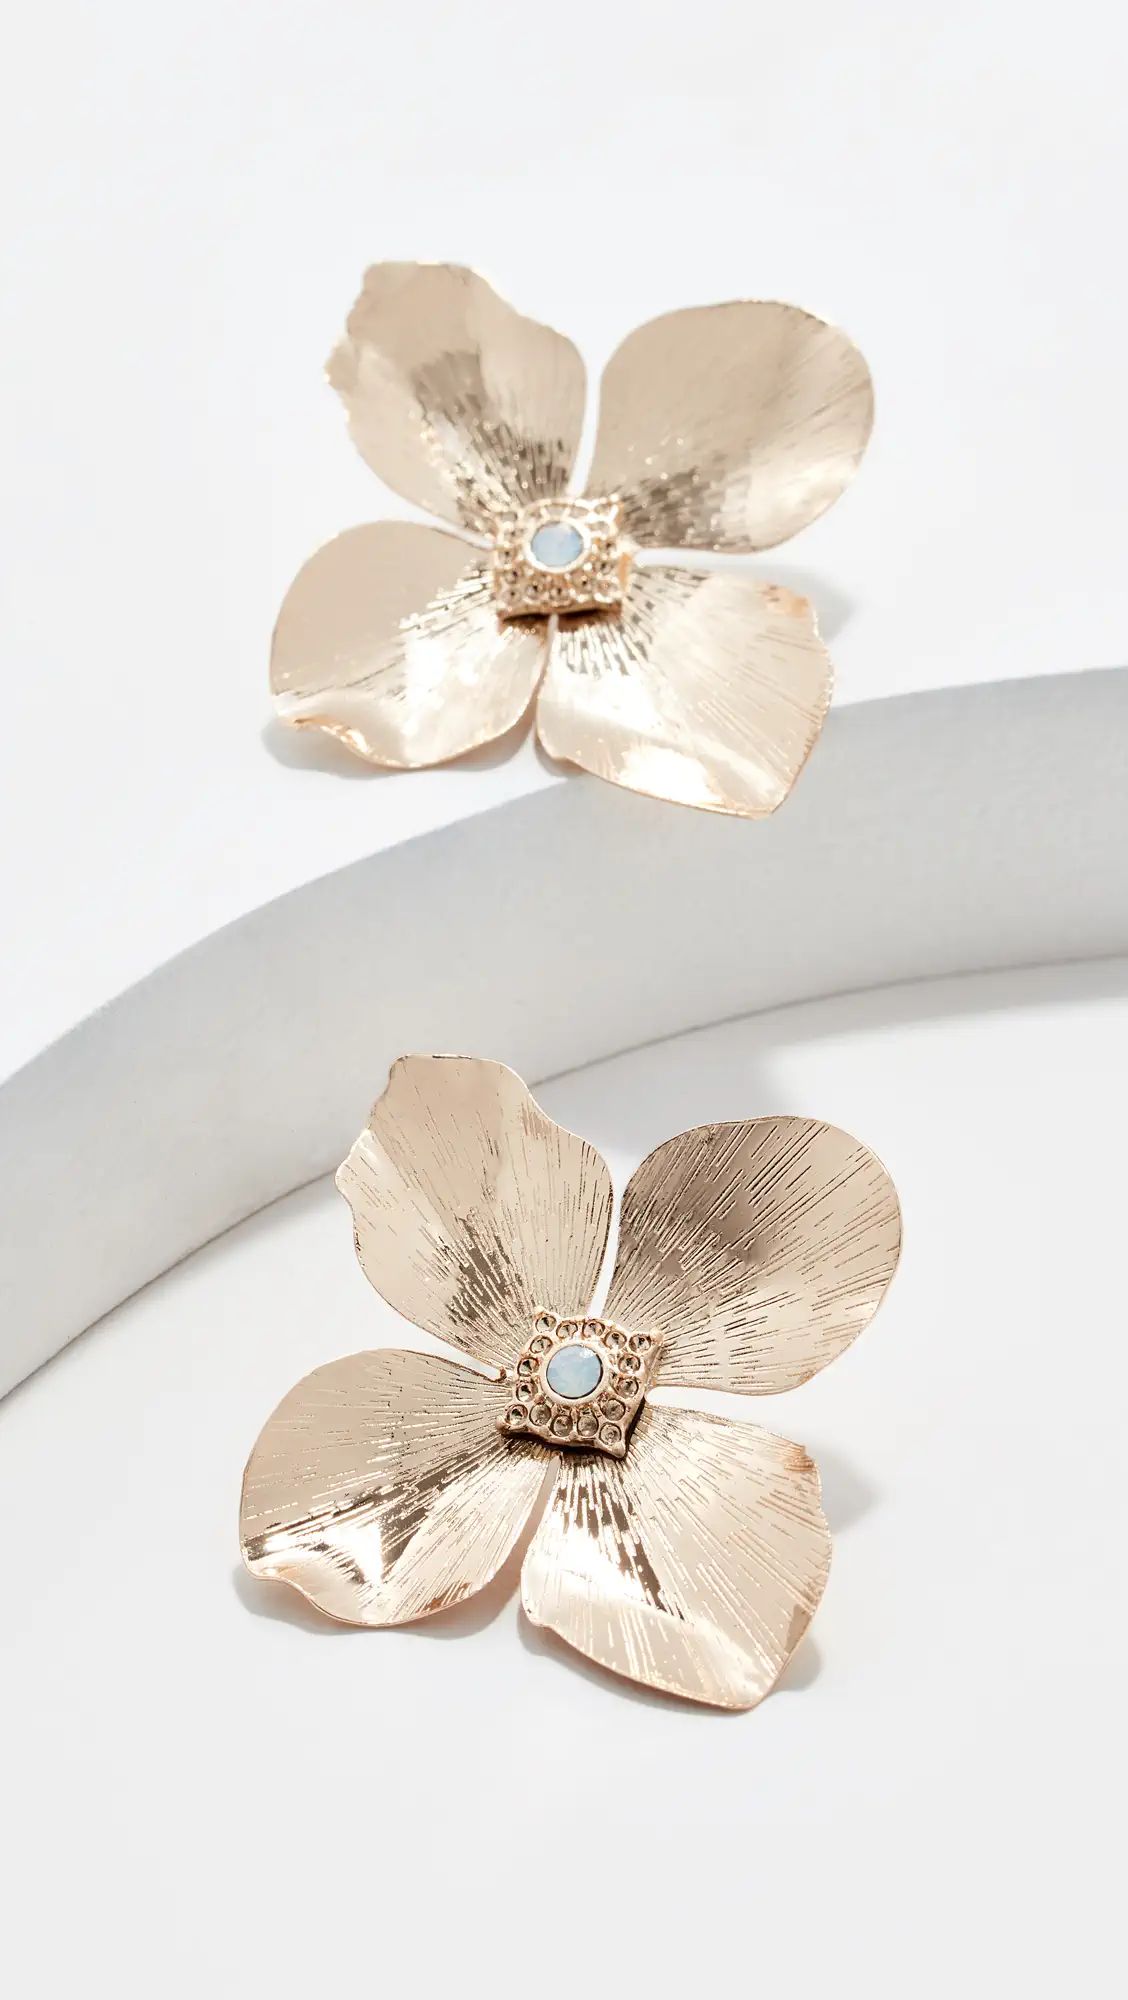 Blossom Earrings | Shopbop